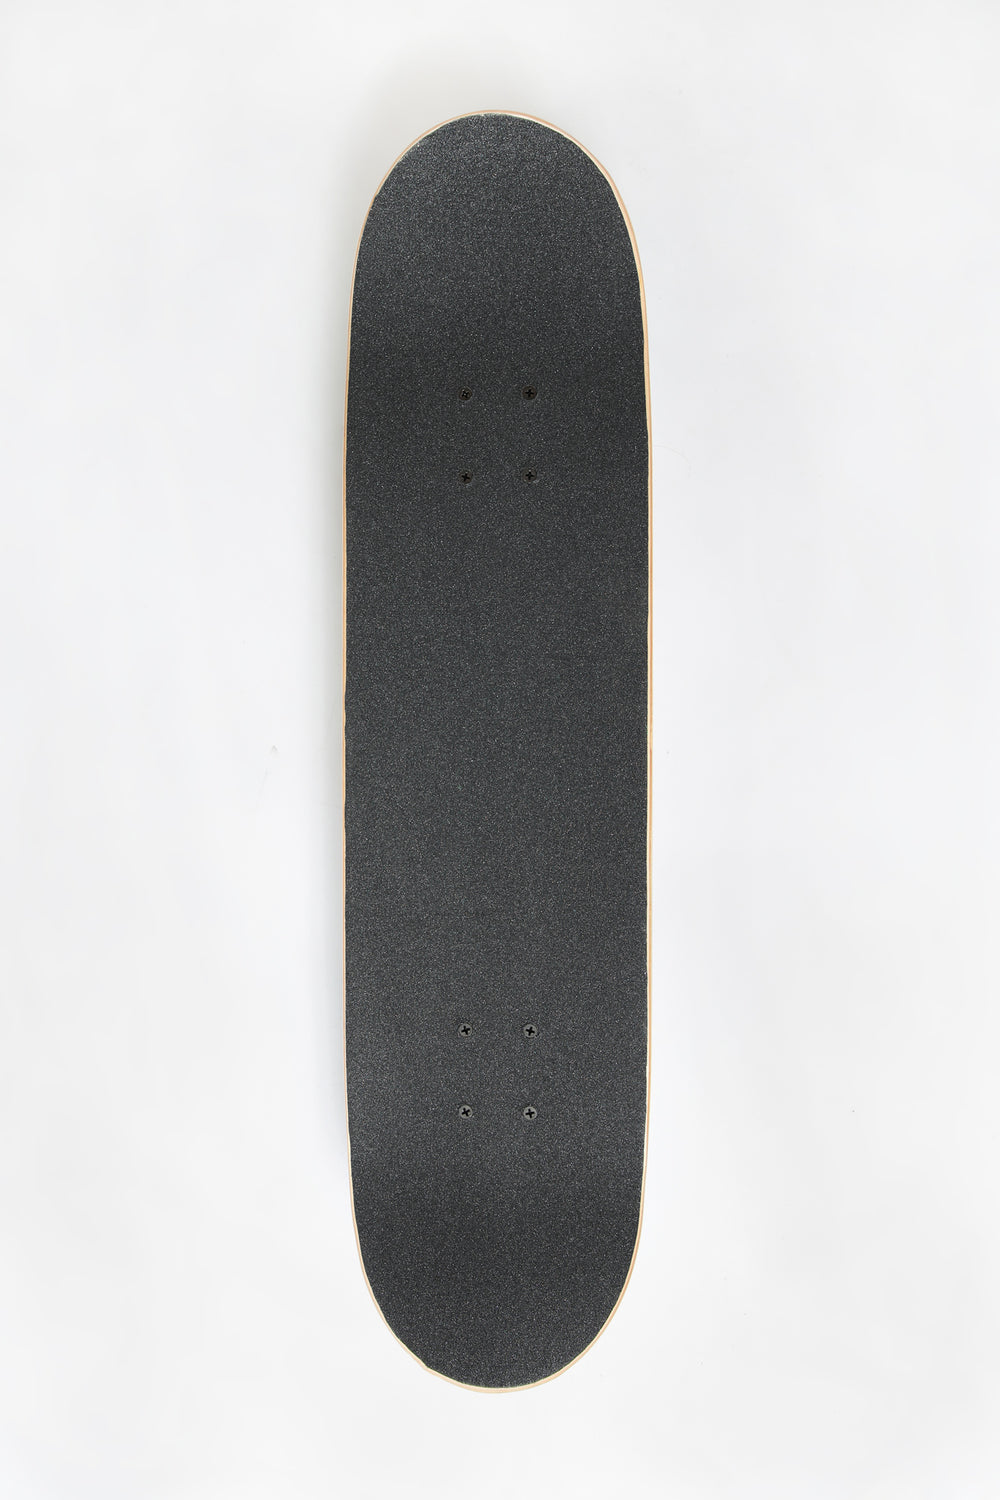 Skateboard Imprimé Champignon Chat Death Valley 7.75